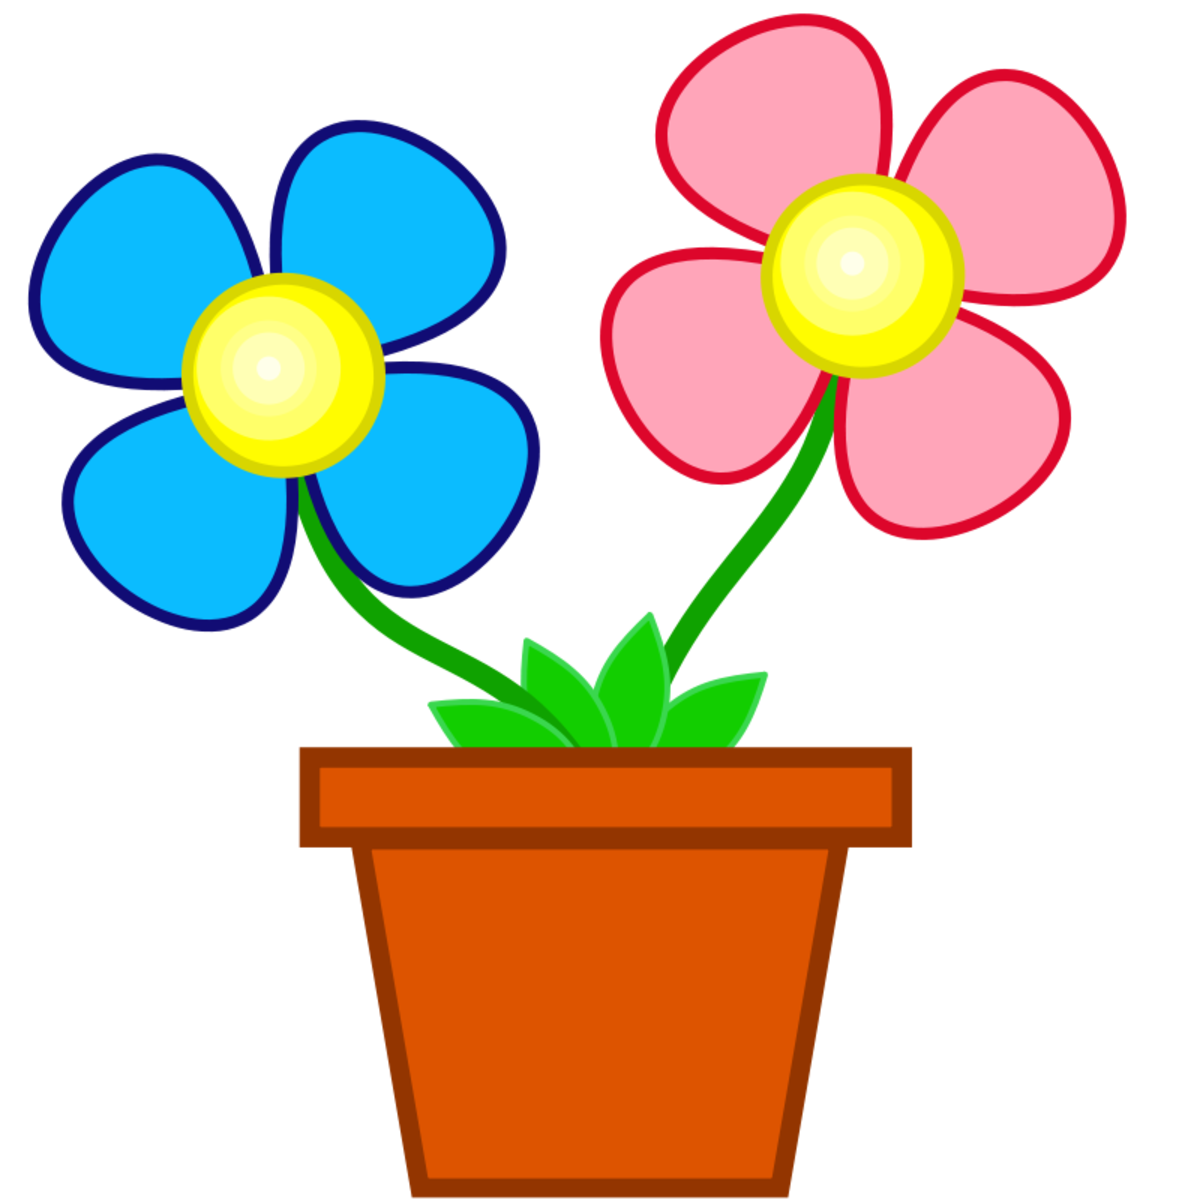 Flowers in a Pot